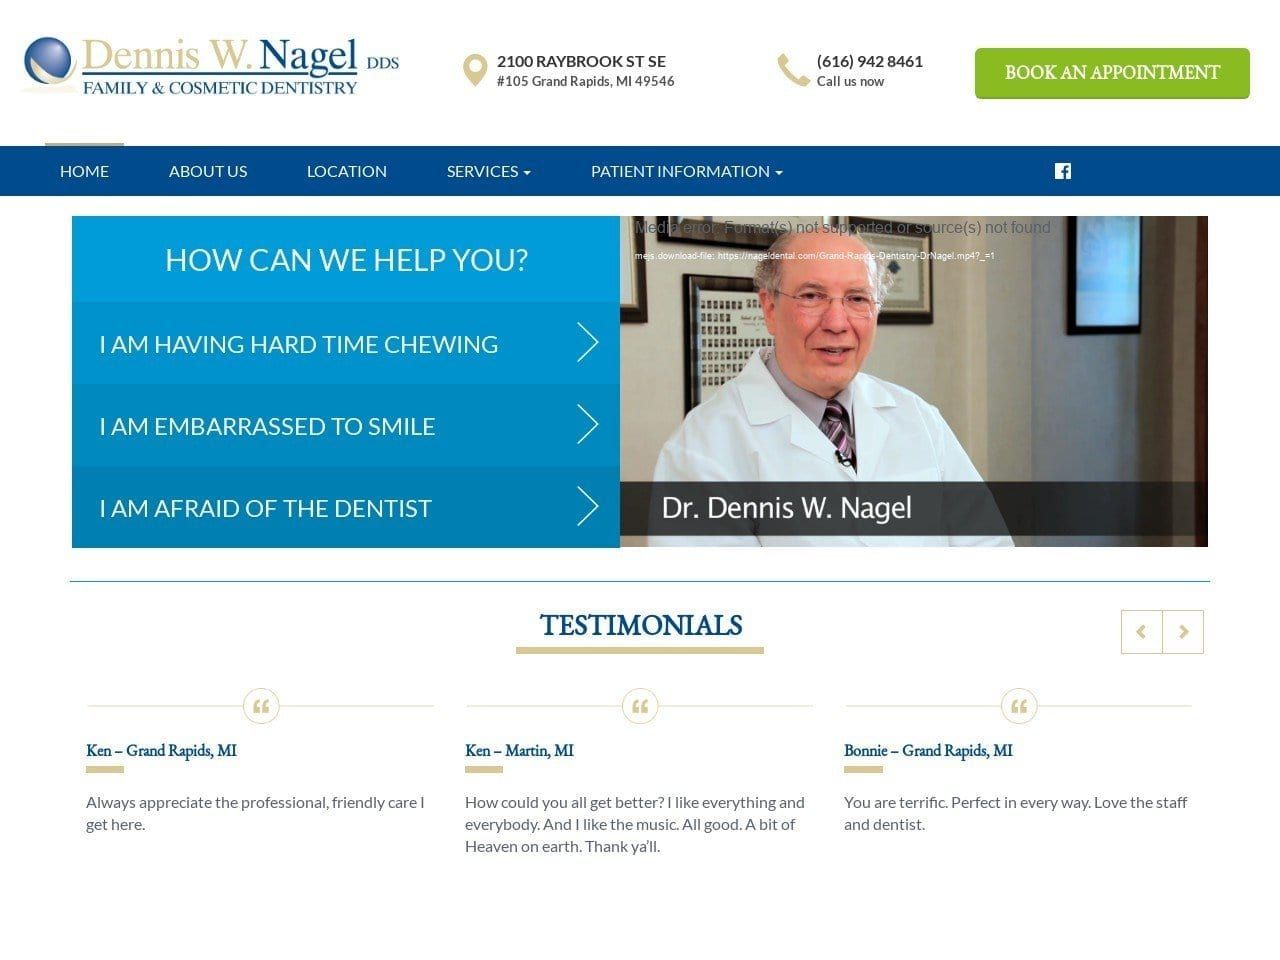 Dennis W Nagel DDS Website Screenshot from grandrapidsfamilydental.com